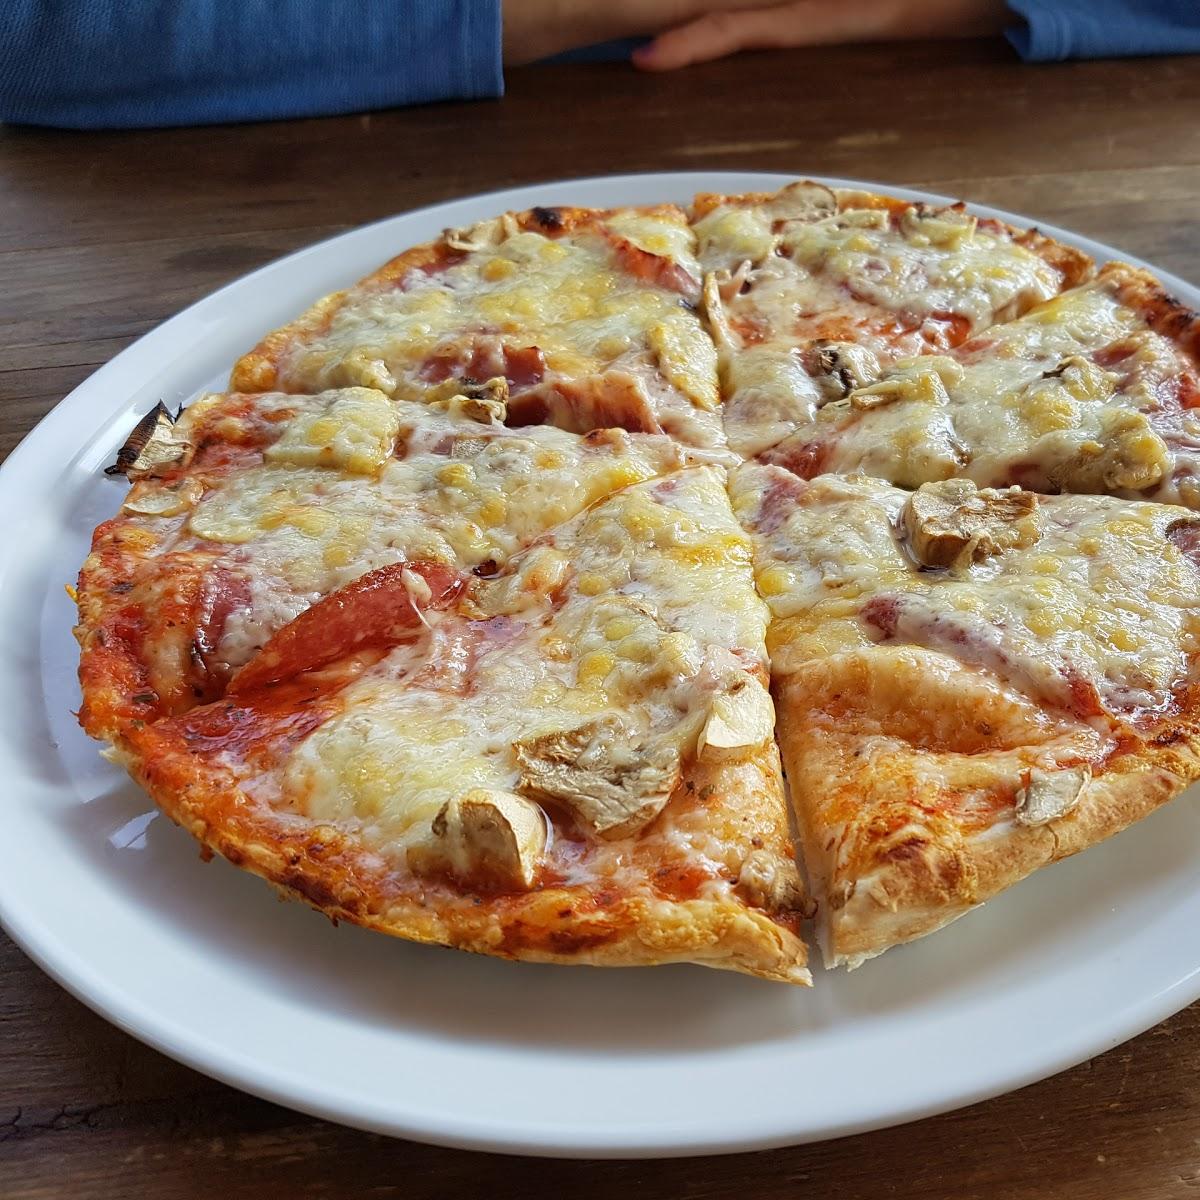 Restaurant "Pizza Italia" in Glauchau